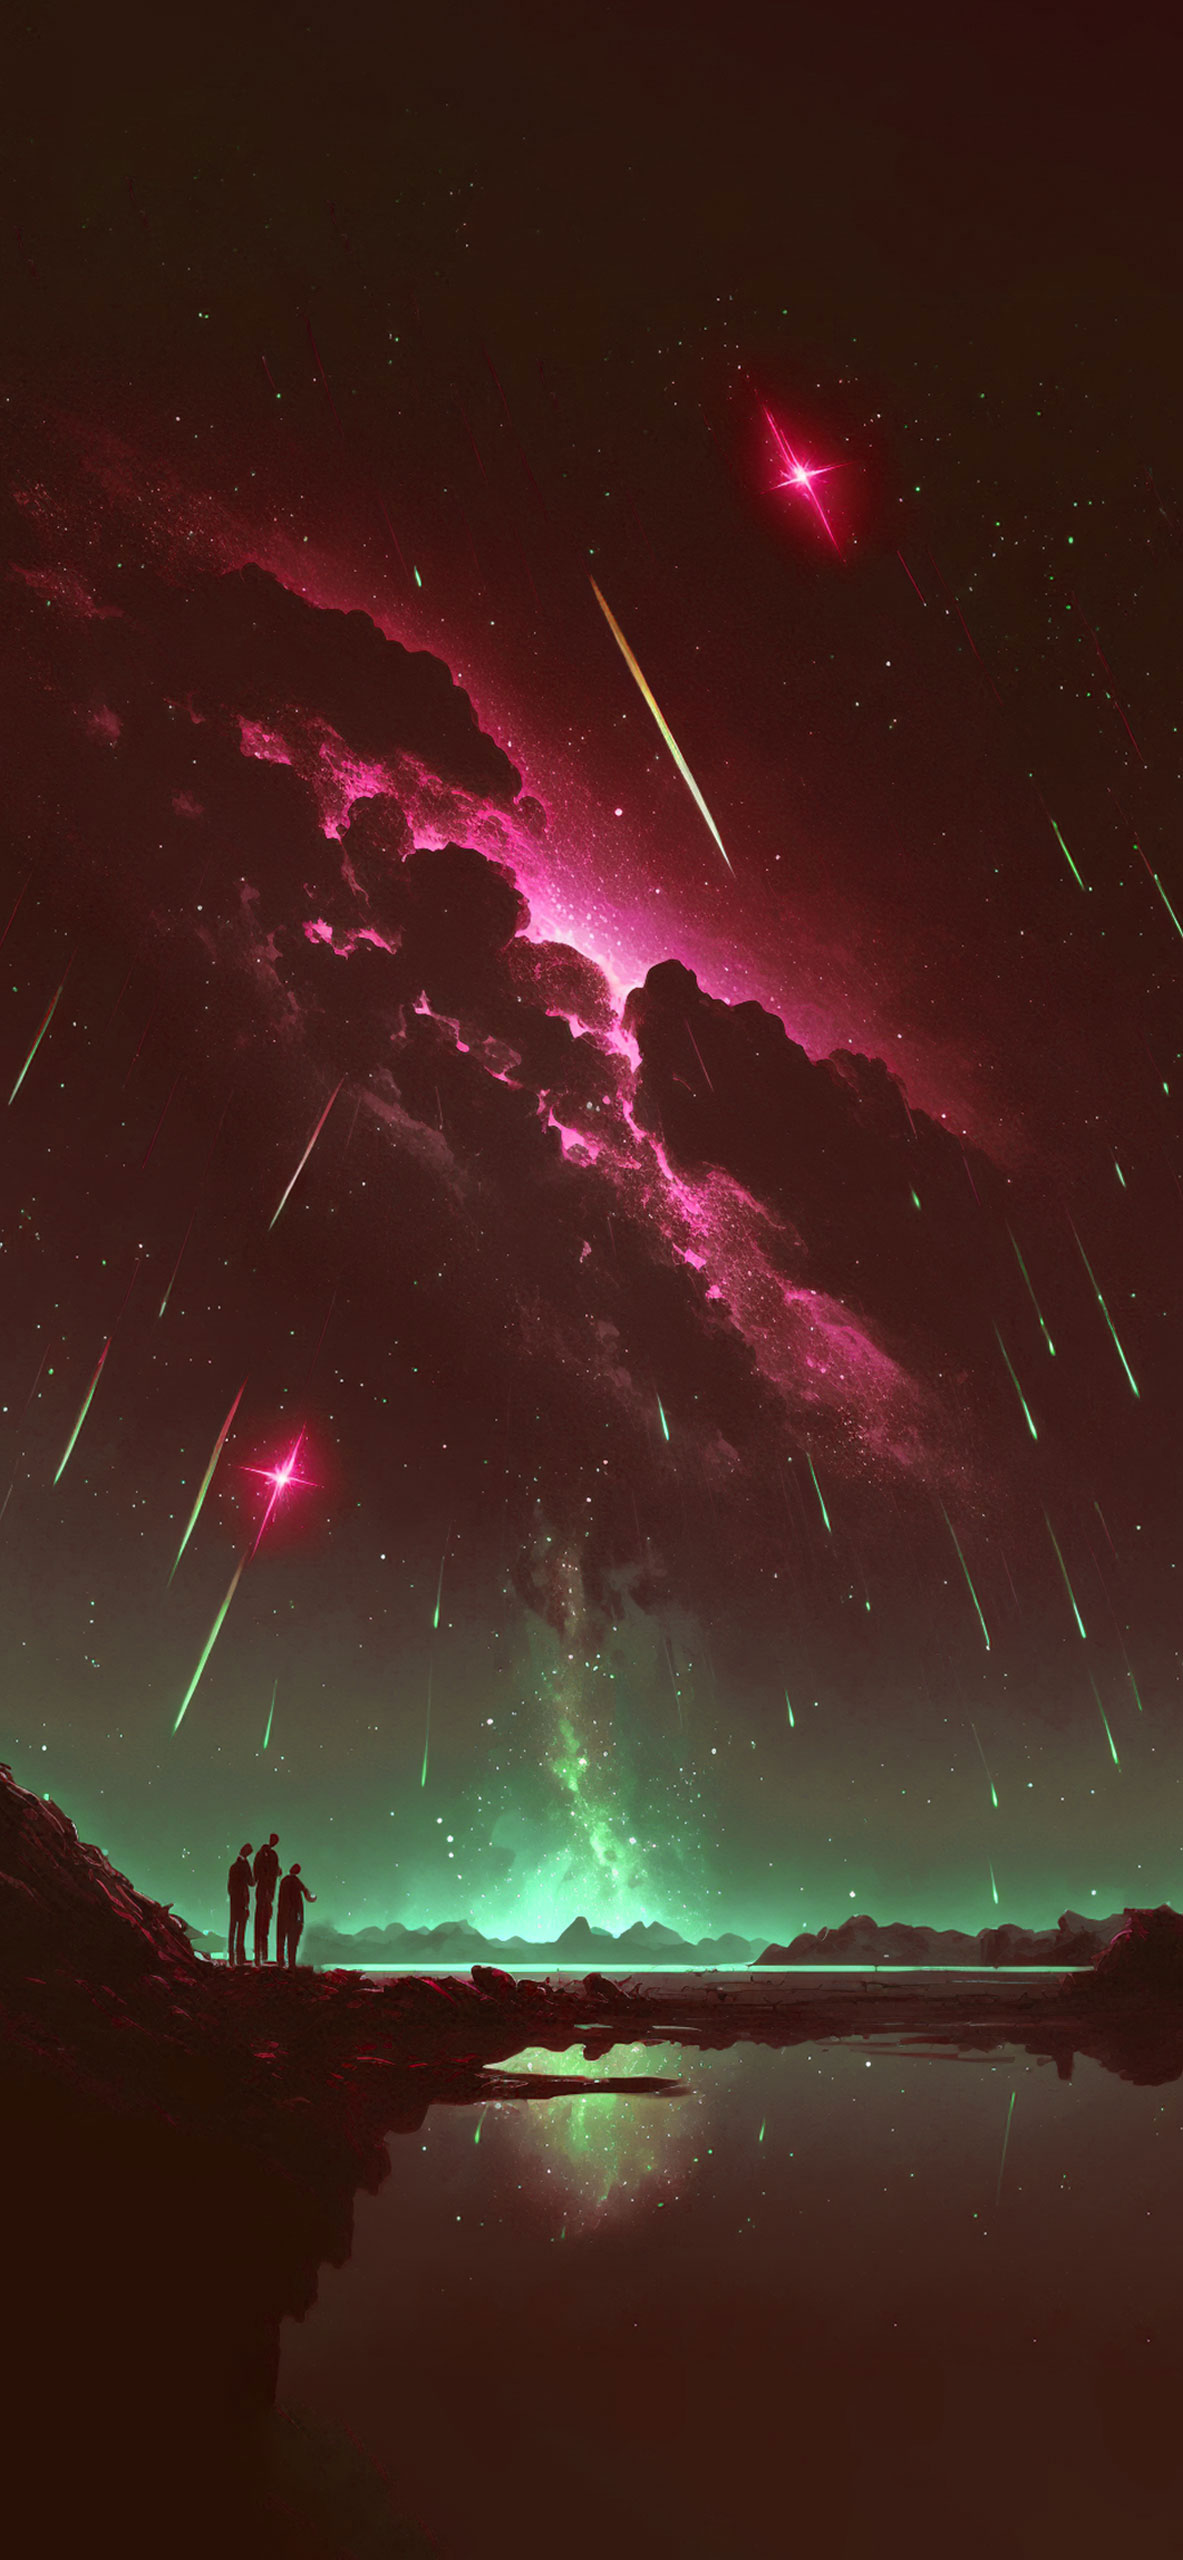 starfalls in the night sky wallpaper 2